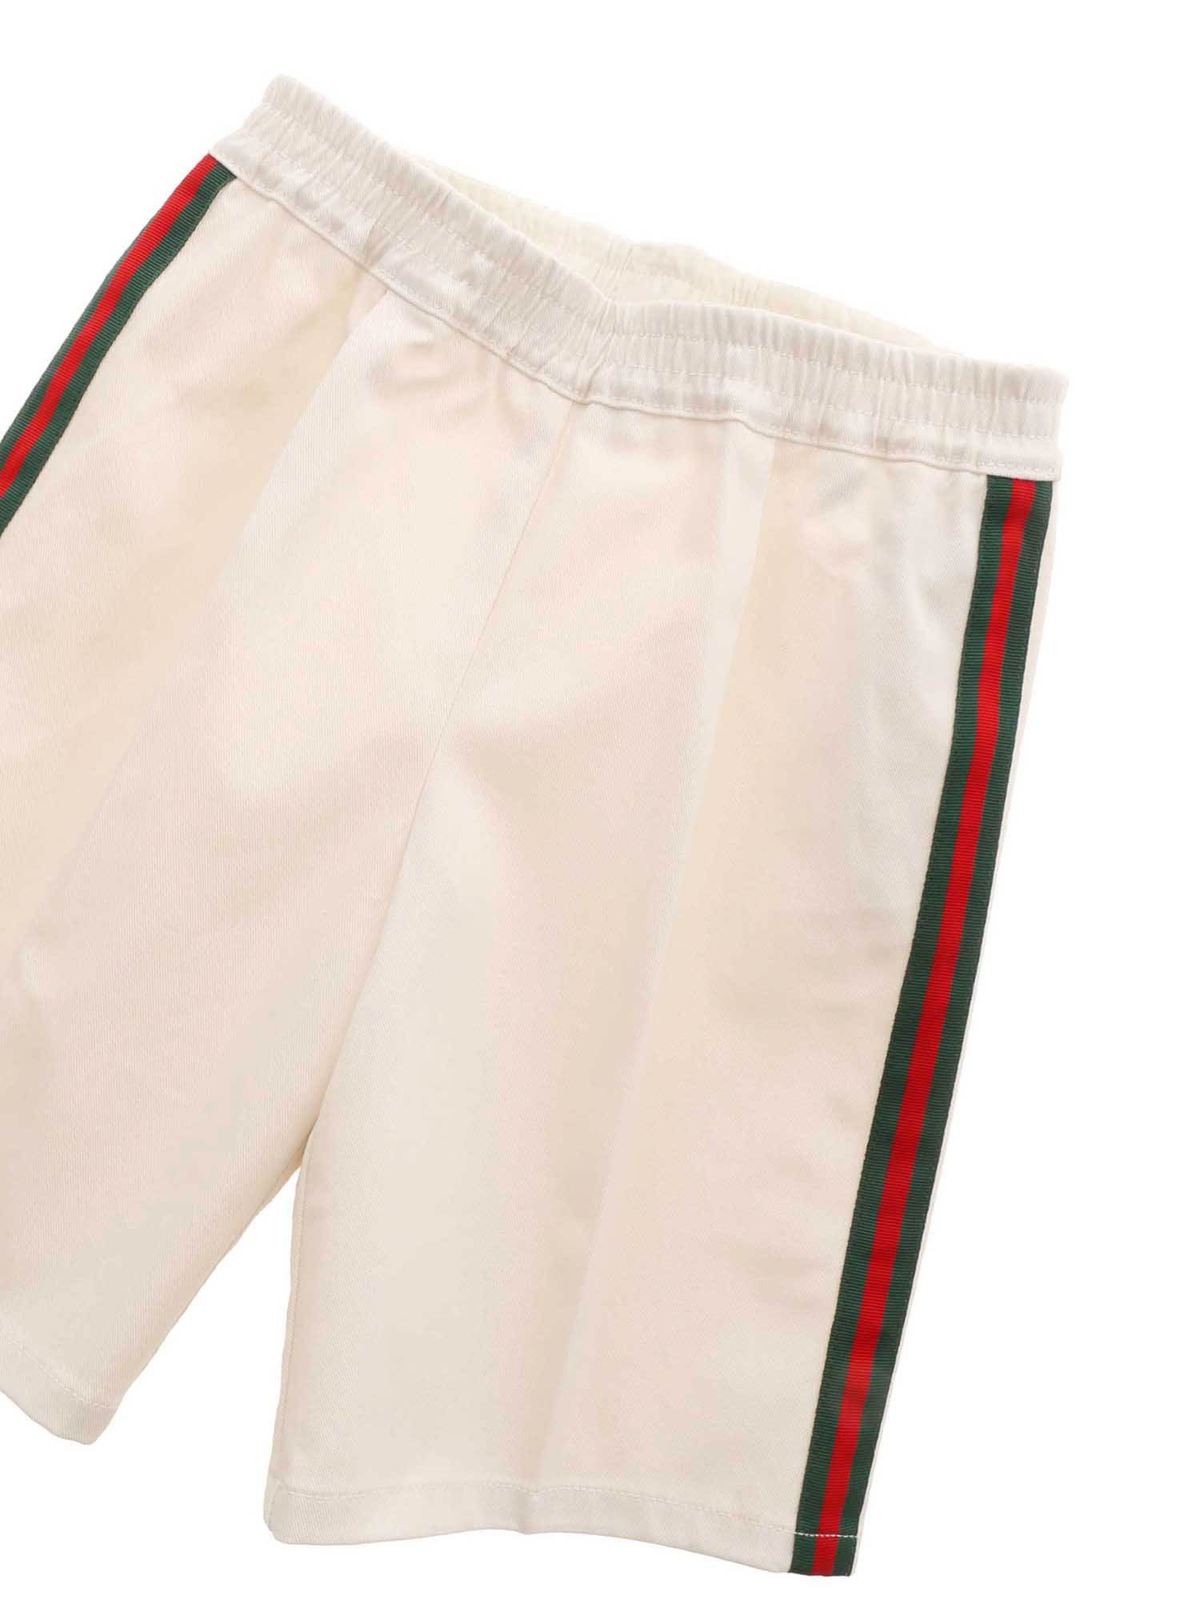 gucci bermuda shorts